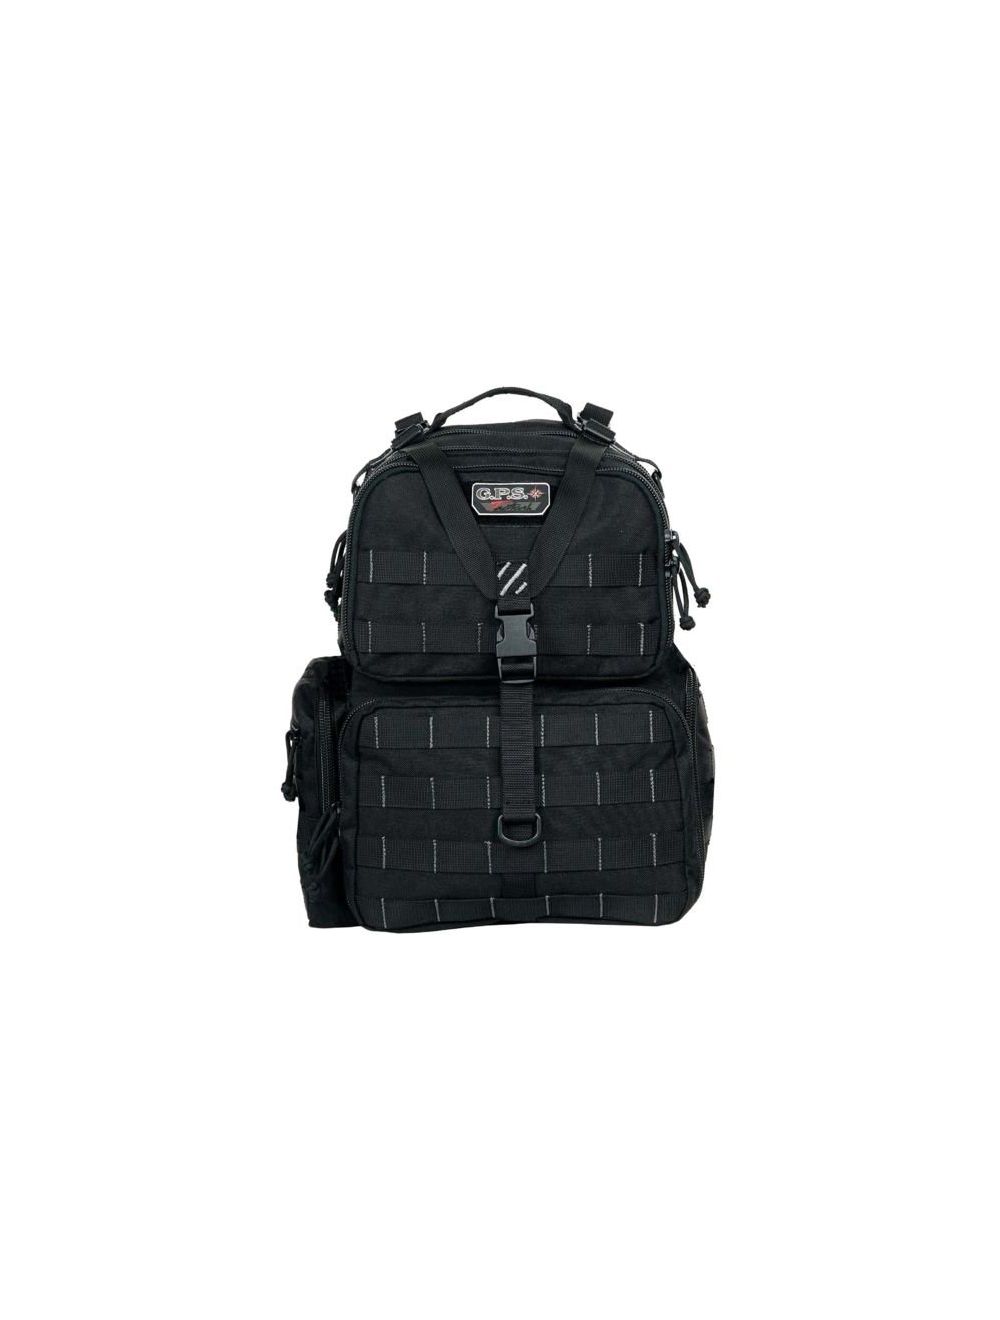 Tactical Range Backpack - Holds 3 Handguns